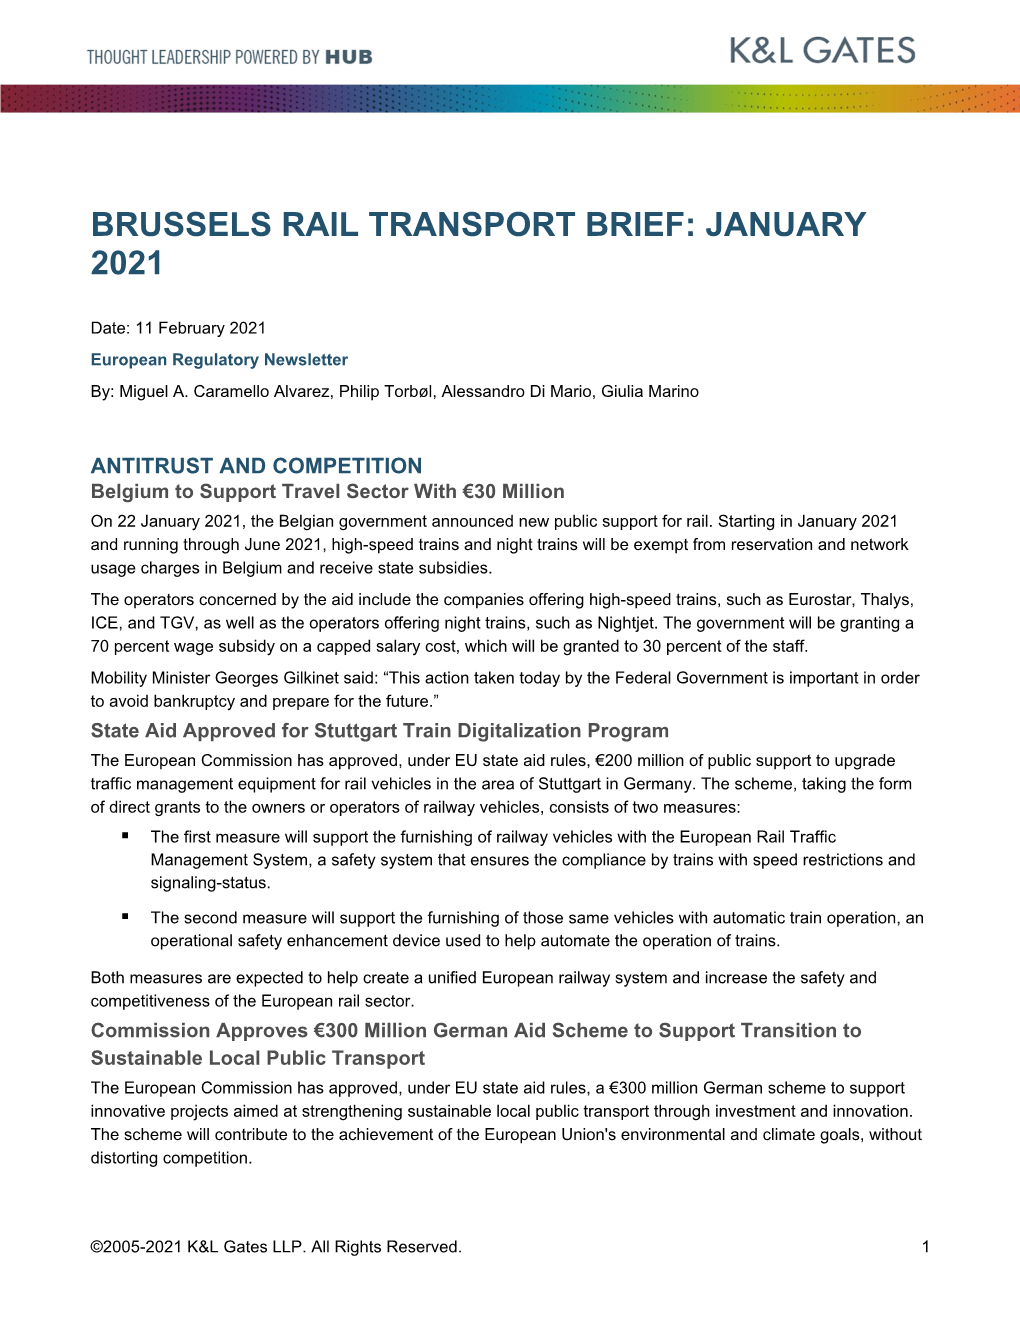 Brussels Rail Transport Brief: January 2021